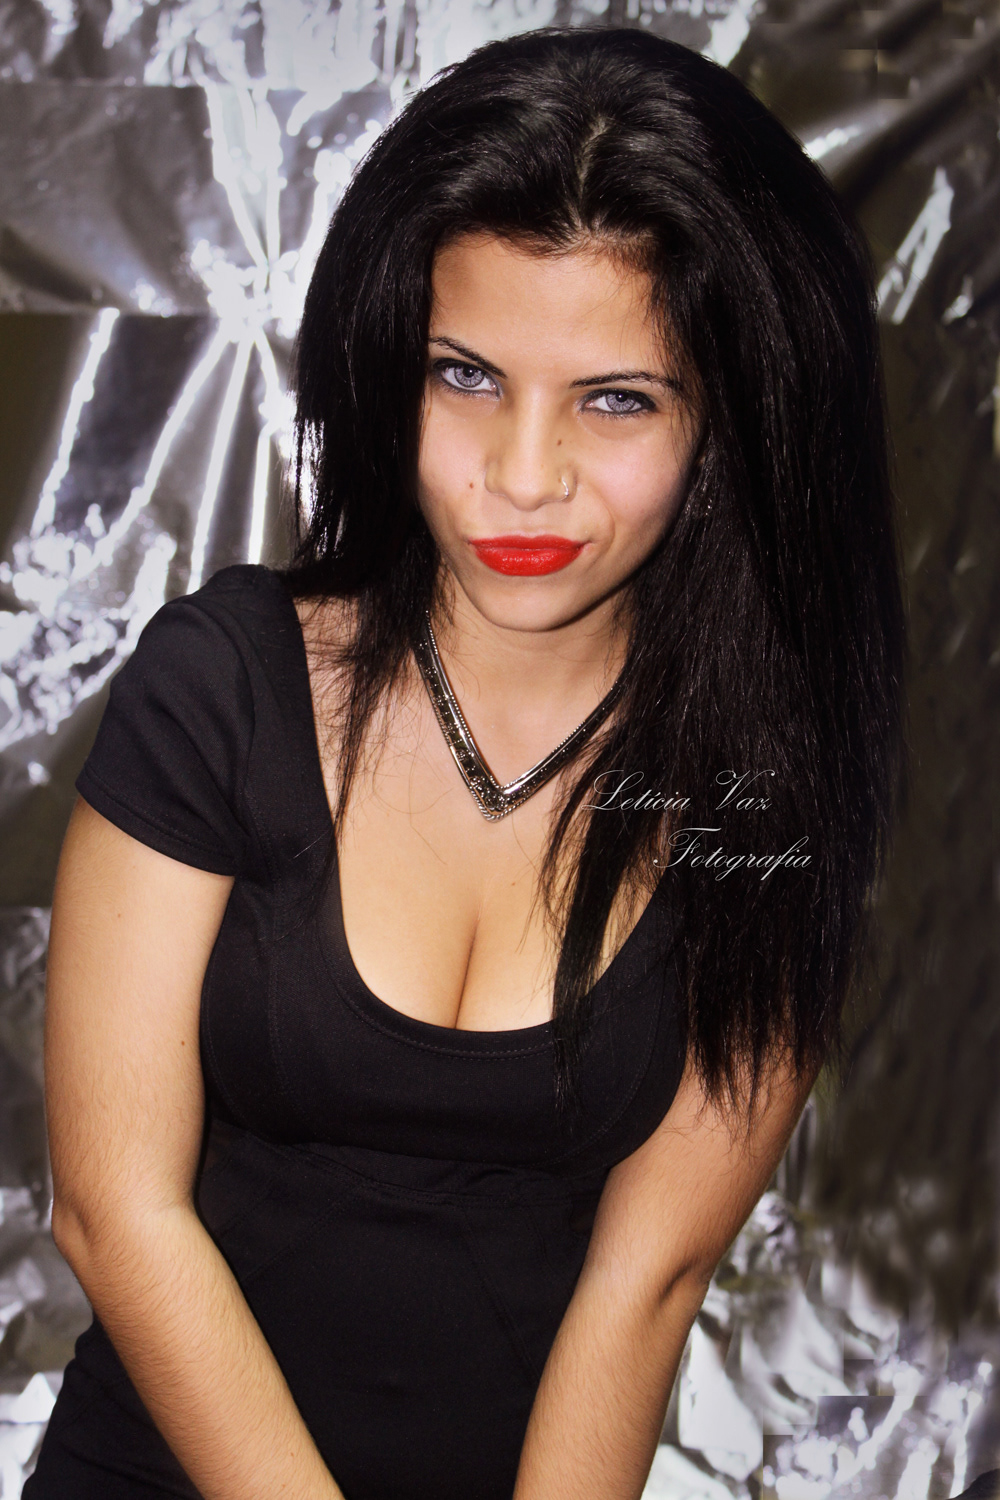 photo Fotografia model ana Tiago Leticia  vaz  Black red lips